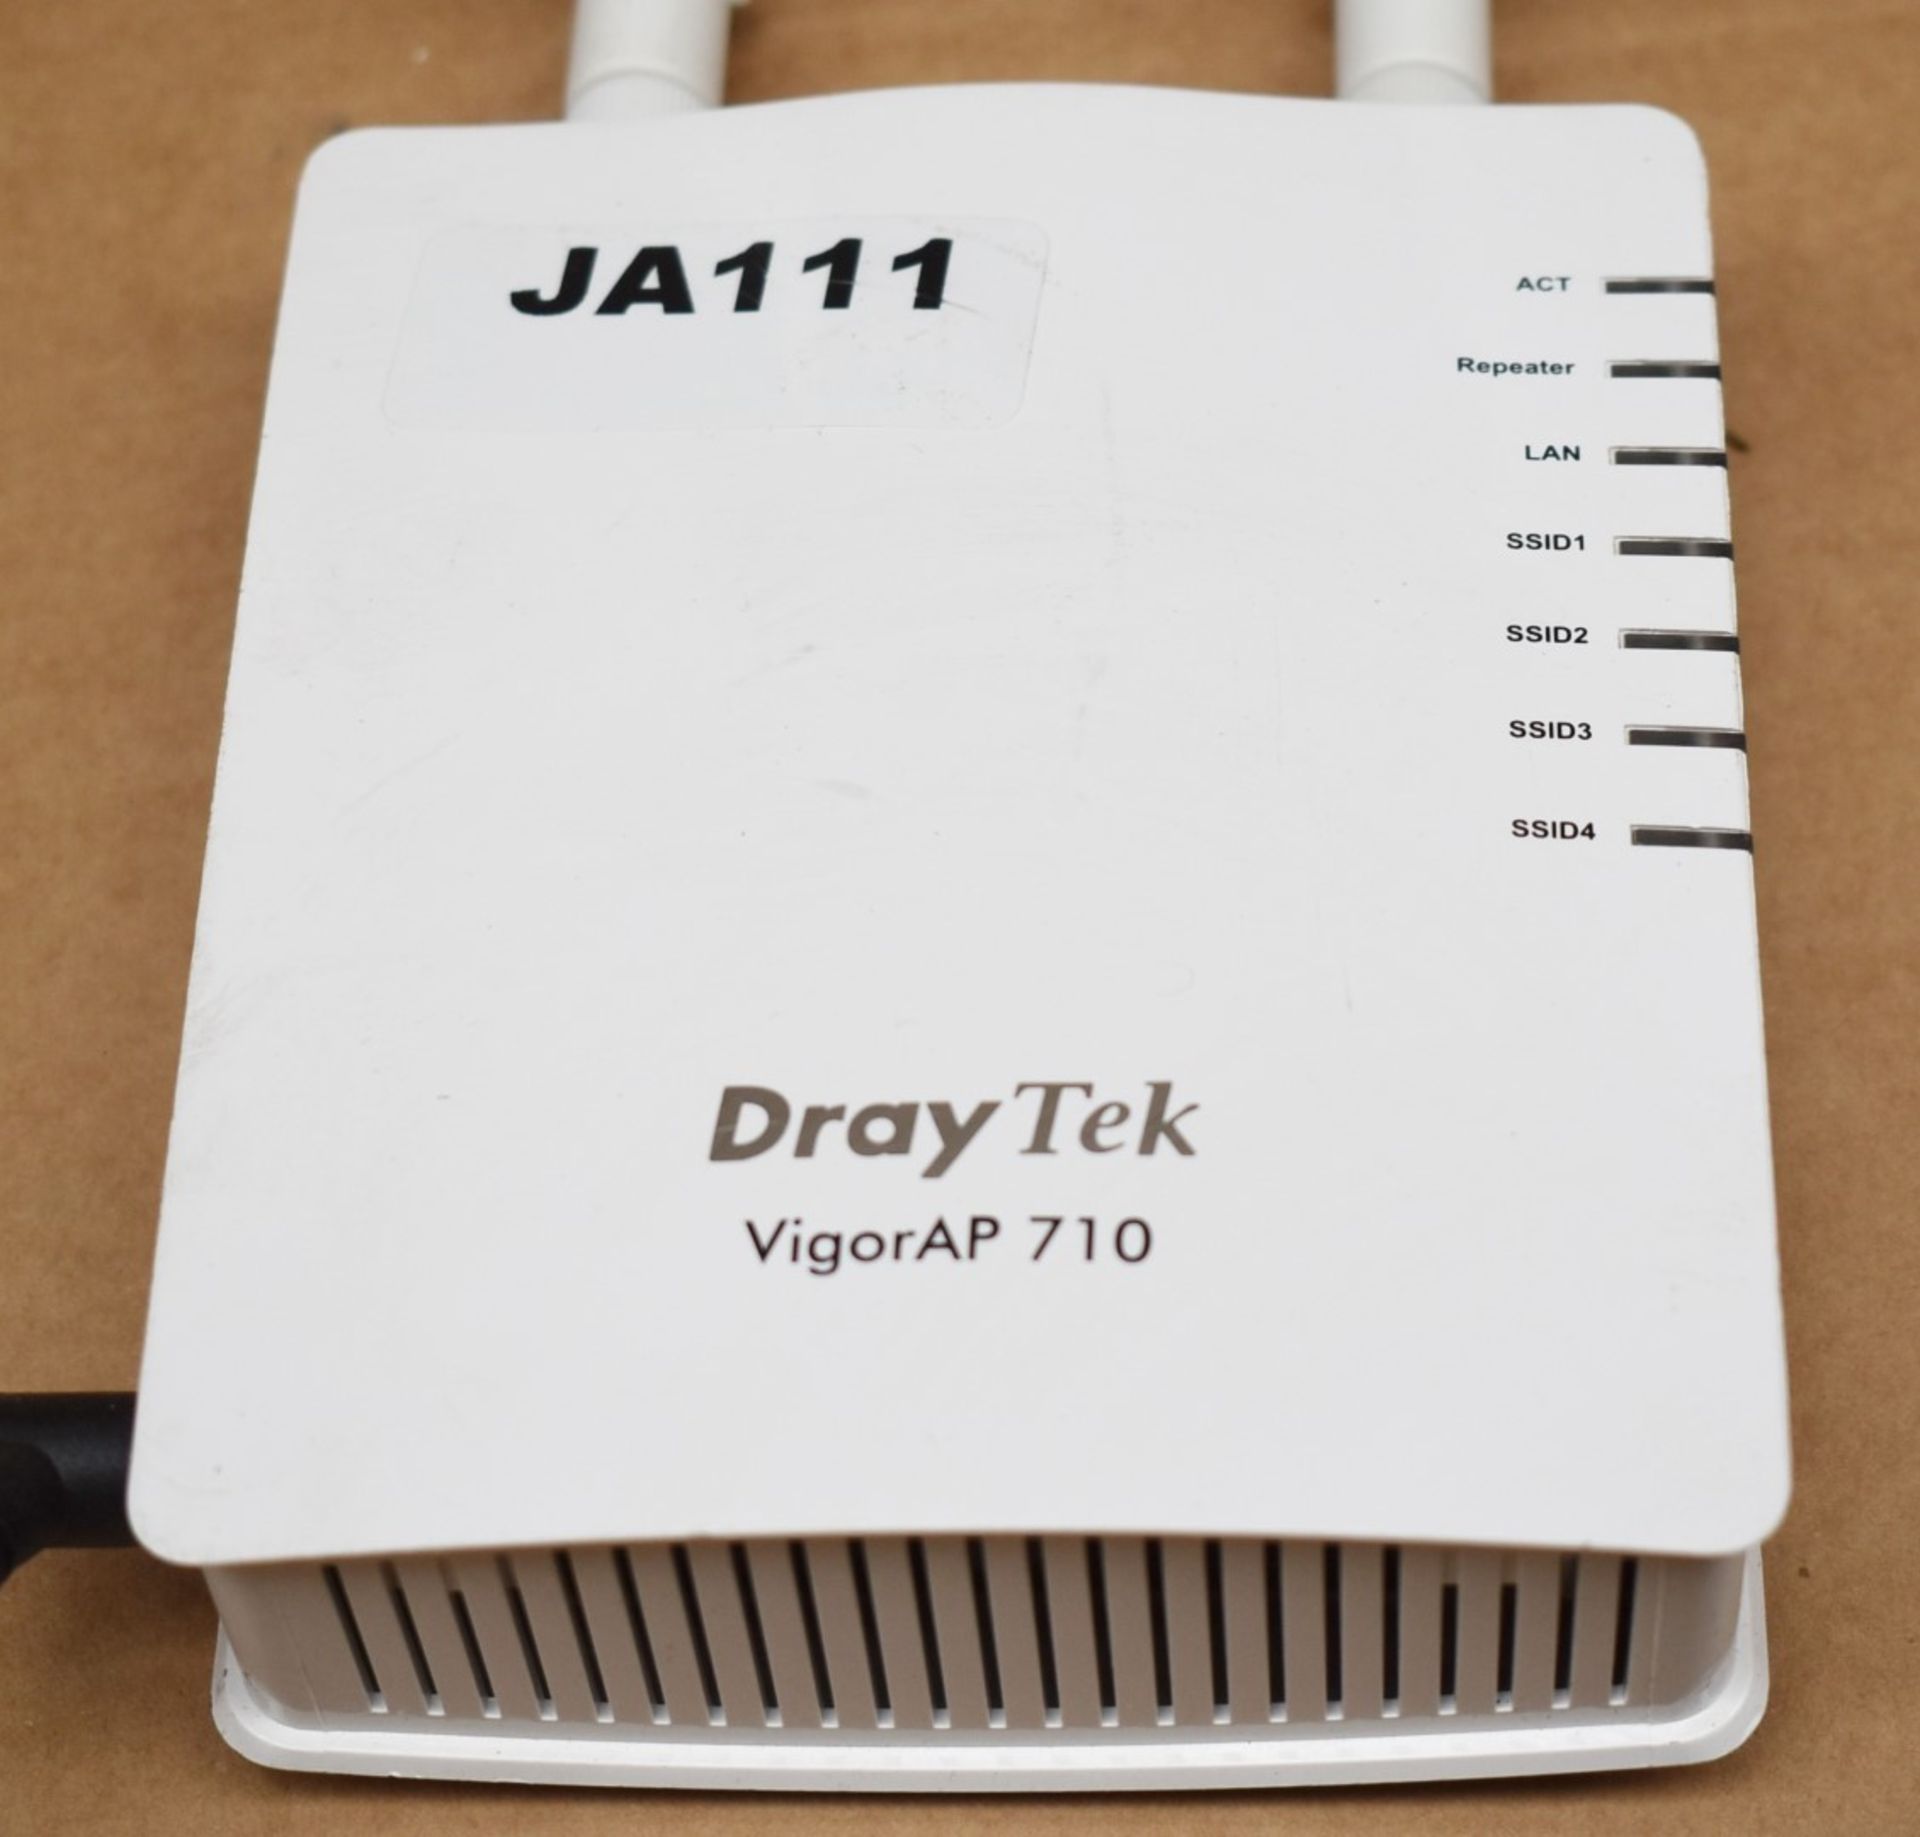 1 x Draytek Vigor AP-710 Wireless Access Point - CL011 - Ref JA111 - Location: Altrincham WA14 - Image 4 of 4